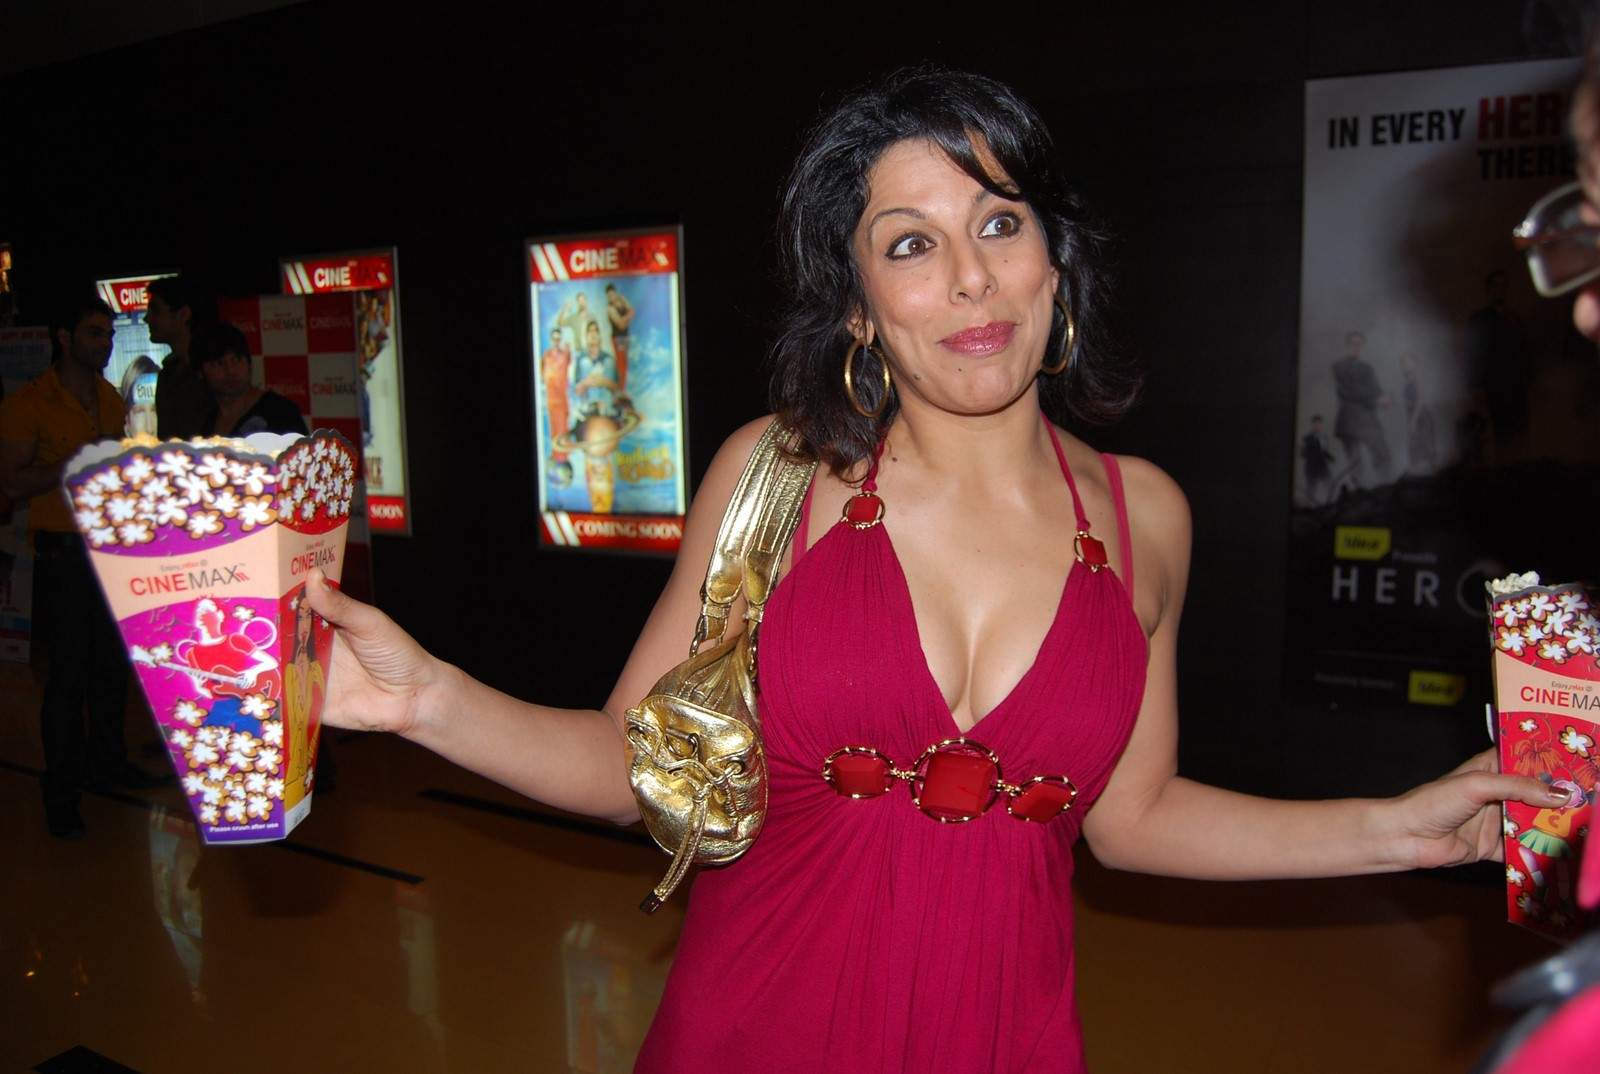 Pooja Bedi Holding Popcorn